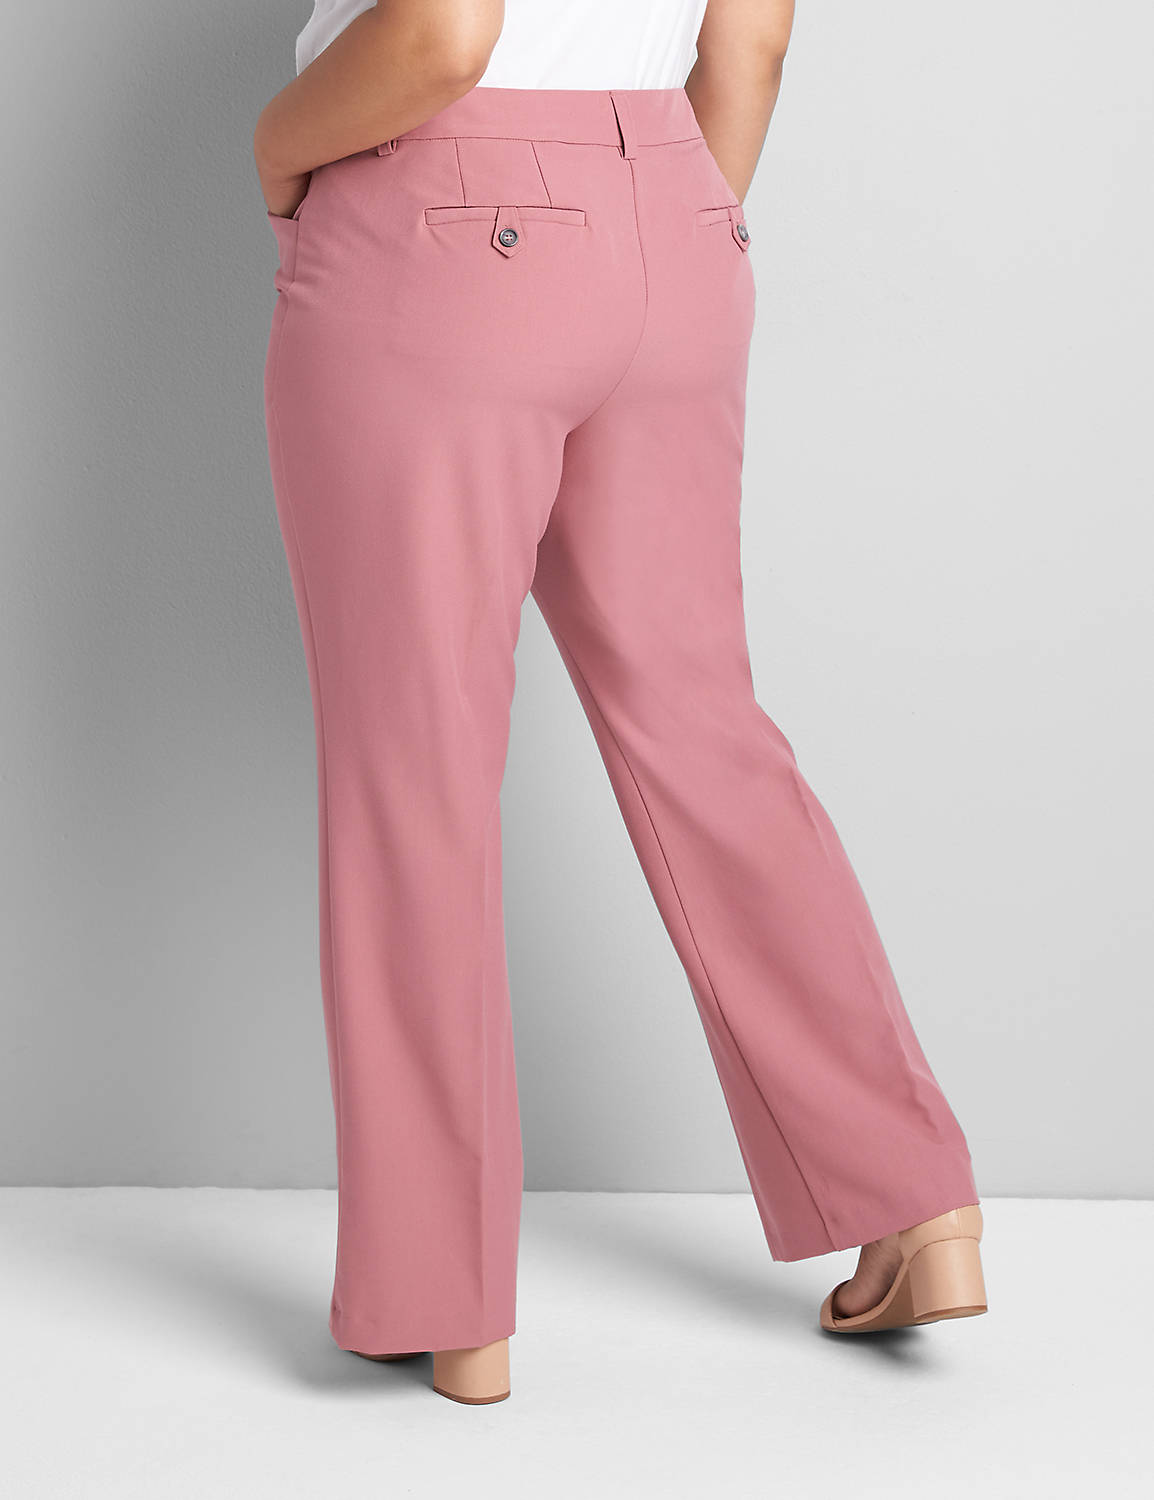 Lane Essentials Houston Trouser Pant Product Image 2